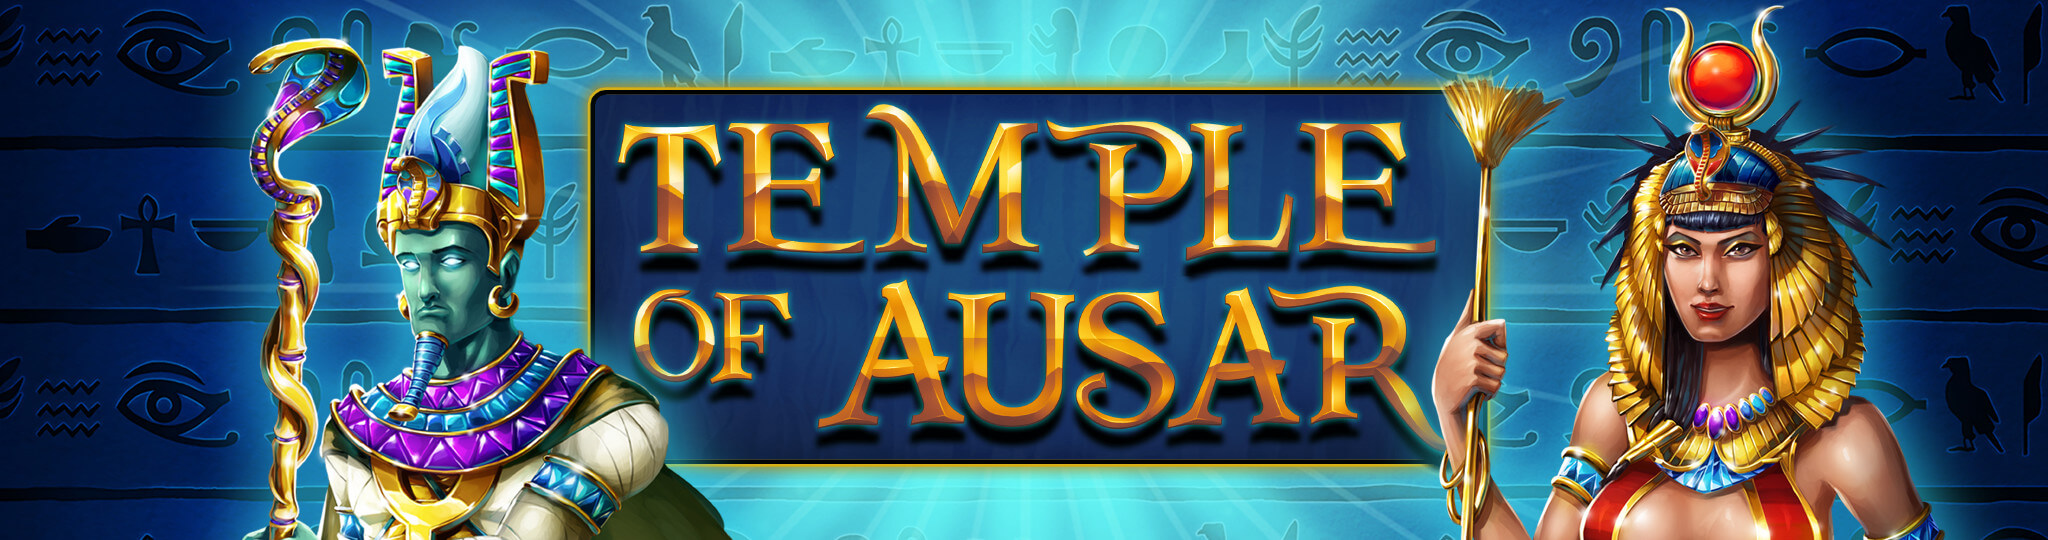 Temple of Ausar logo